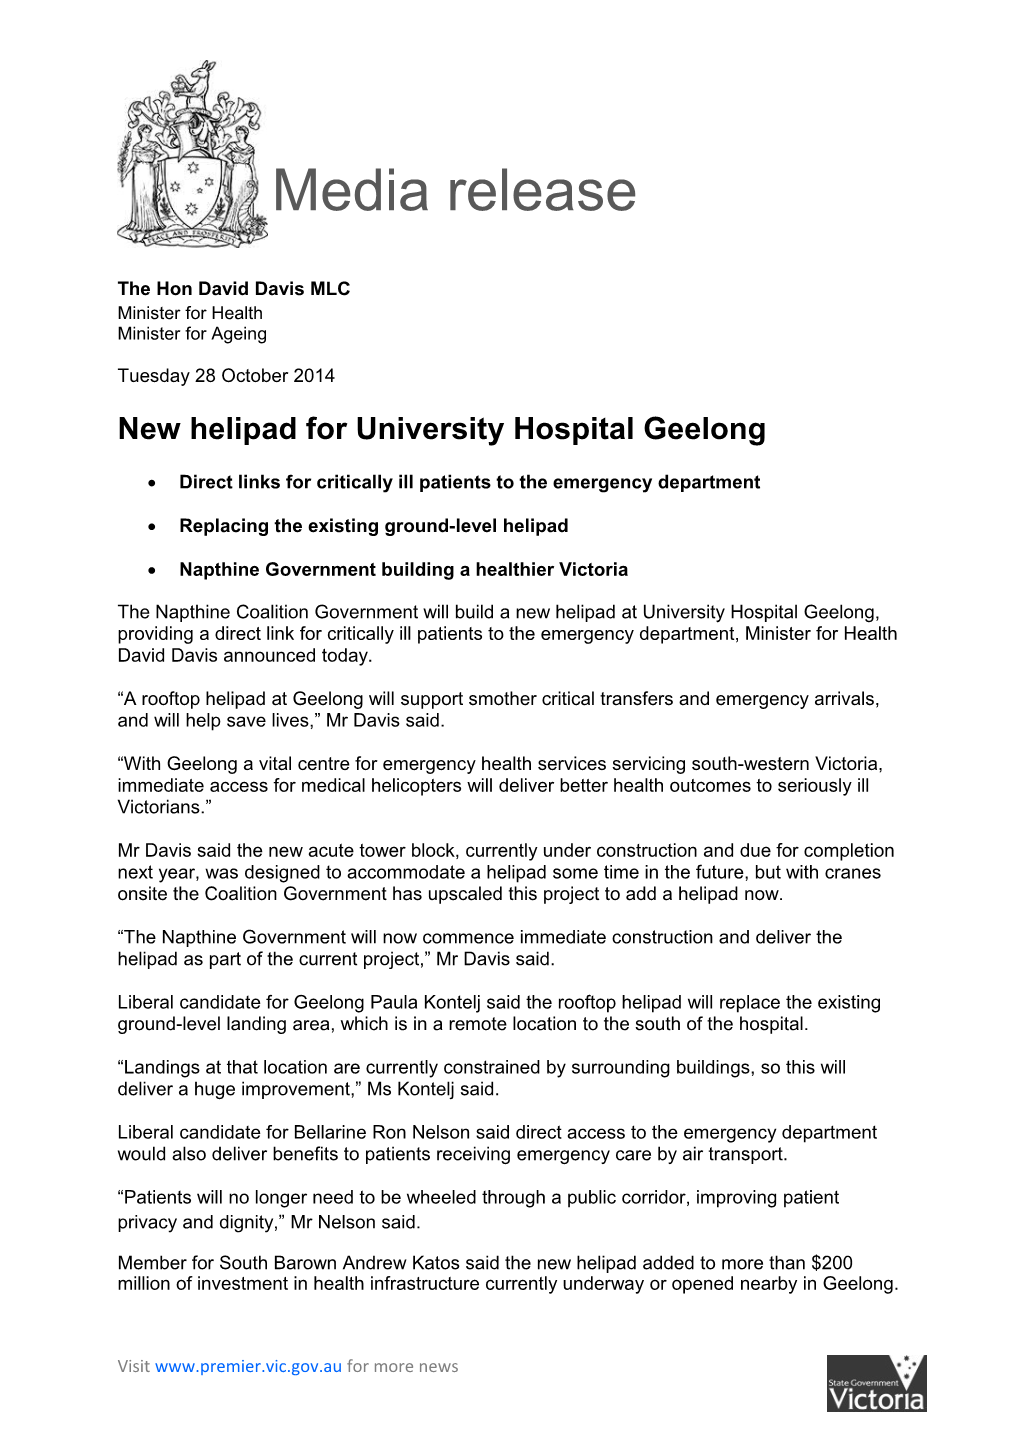 New Helipad for University Hospital Geelong